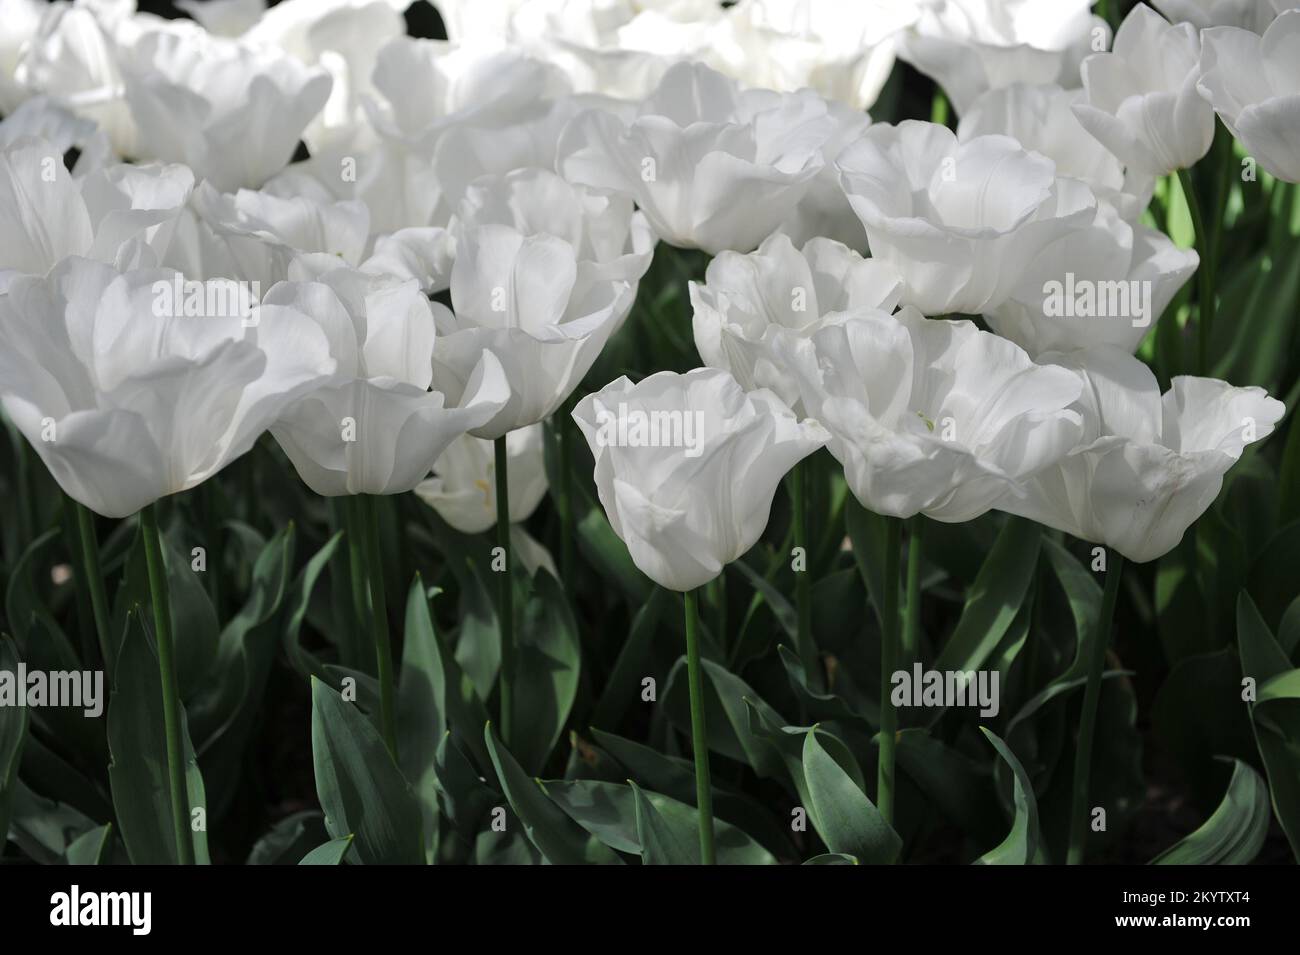 White Triumph tulips (Tulipa) Update bloom in a garden in April Stock Photo